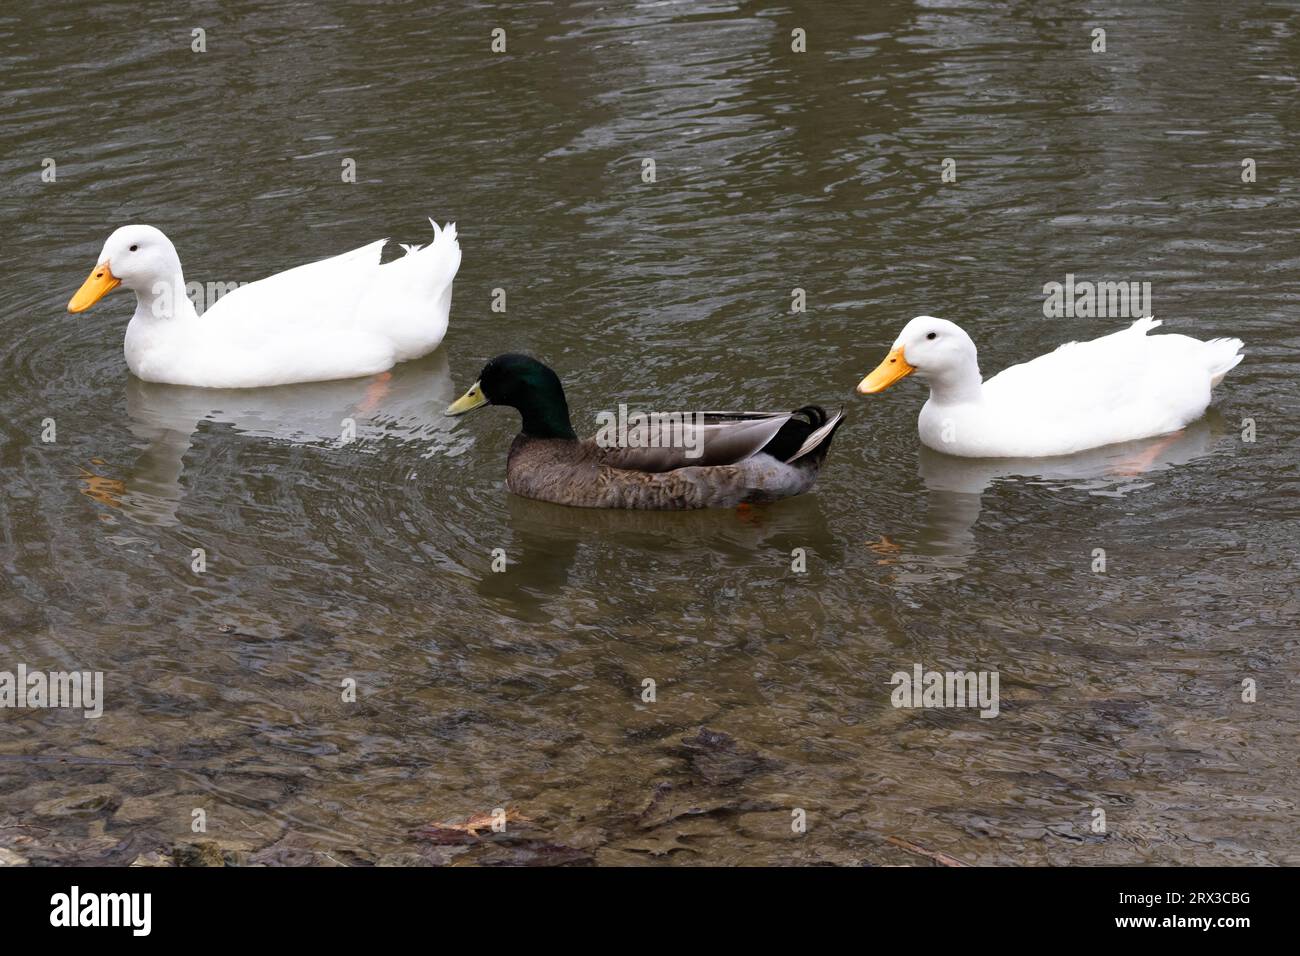 three ducks in a pond Stock Photo